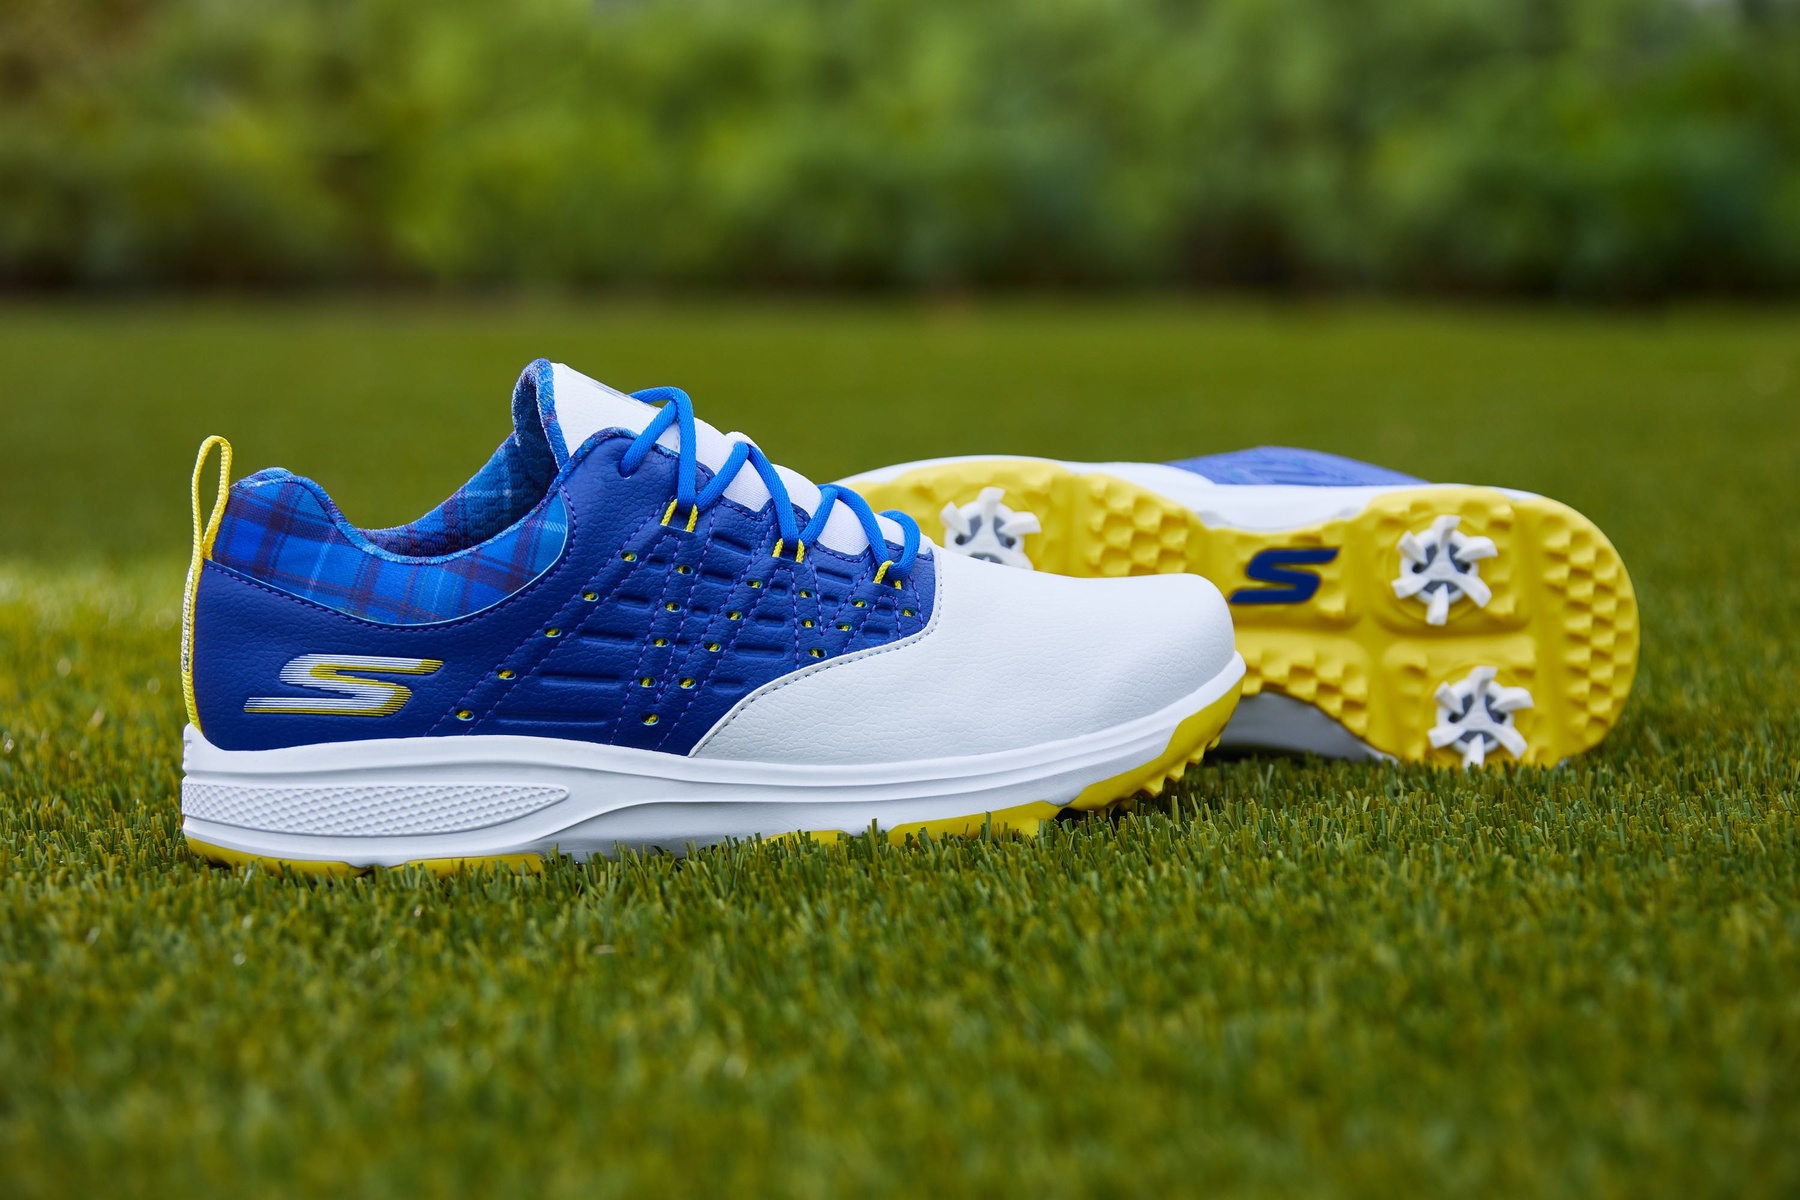 Portico Gud Tjen Golf Business News - Skechers unveils shoe for Europe's Solheim Cup team